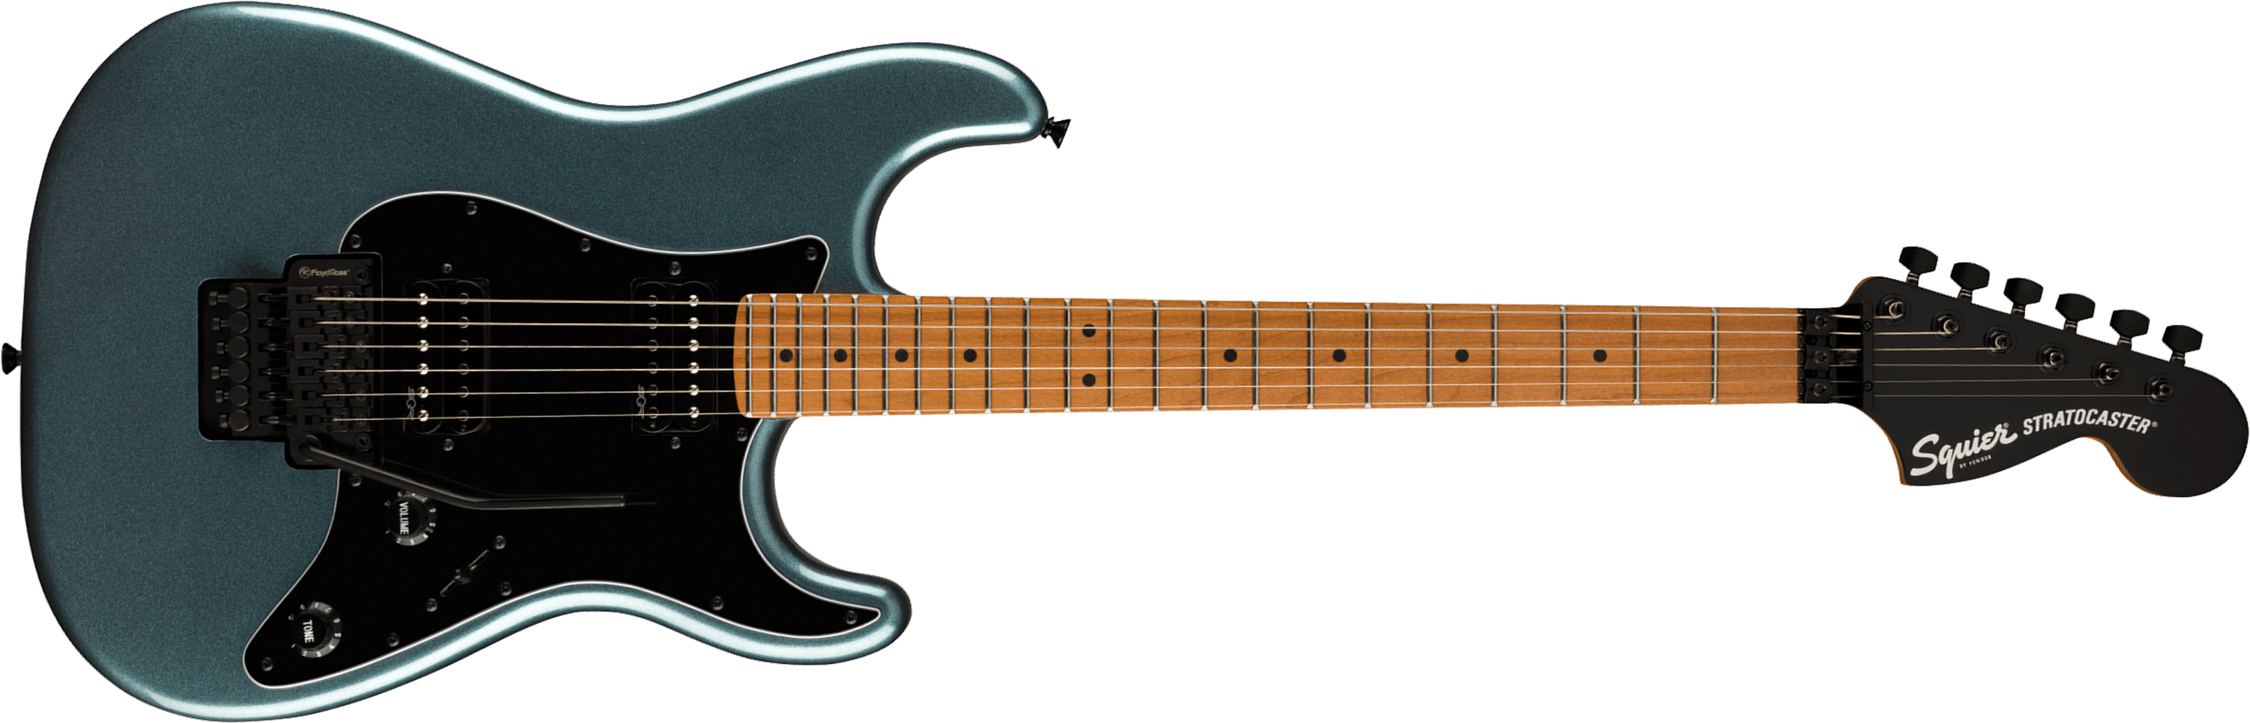 Squier Strat Contemporary Hh Fr Mn - Gunmetal Metallic - Str shape electric guitar - Main picture